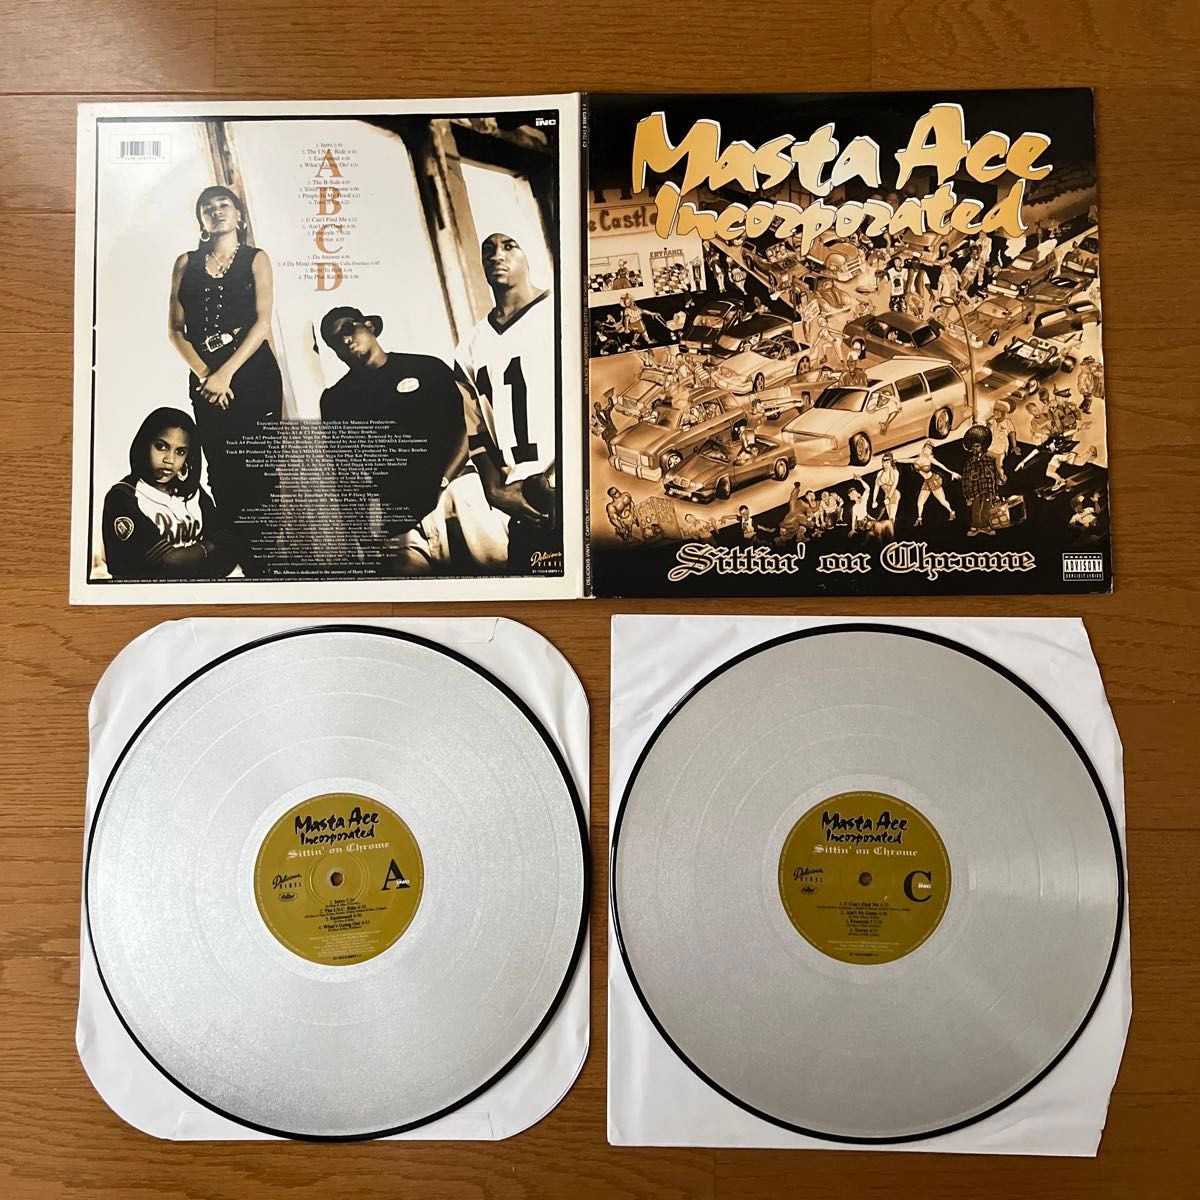 Masta Ace Incorporated - Sittin' On Chrome Vinyl  2LP Rare